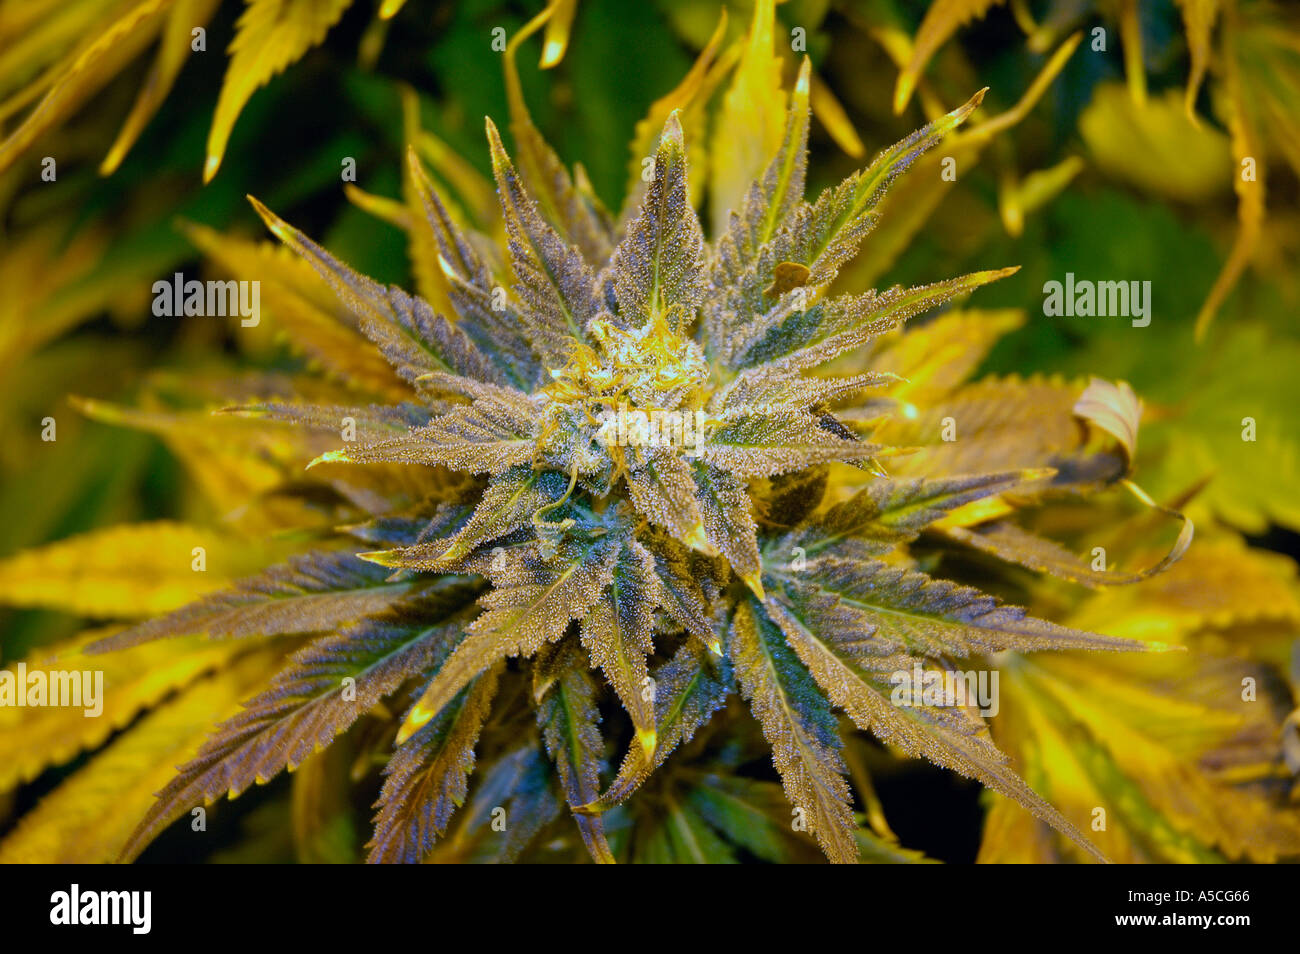 https://c8.alamy.com/comp/A5CG66/the-bud-of-a-cannabis-plant-A5CG66.jpg